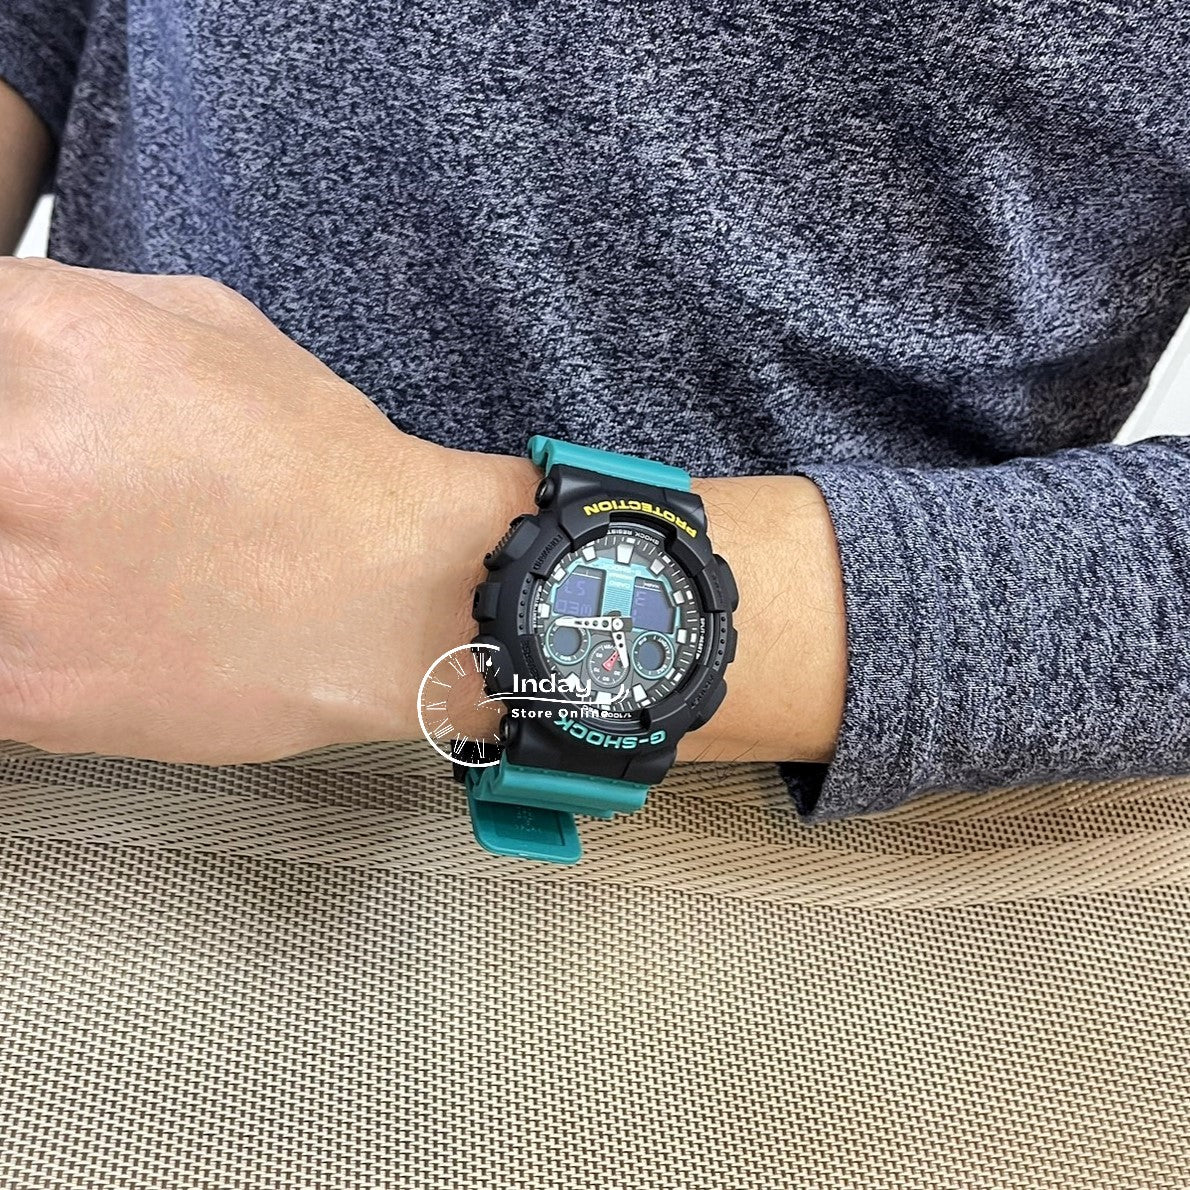 Casio G-Shock Men's Watch GA-100MT-1A3 Analog-Digital Shock Resistant Magnetic Resistant Mineral Glass